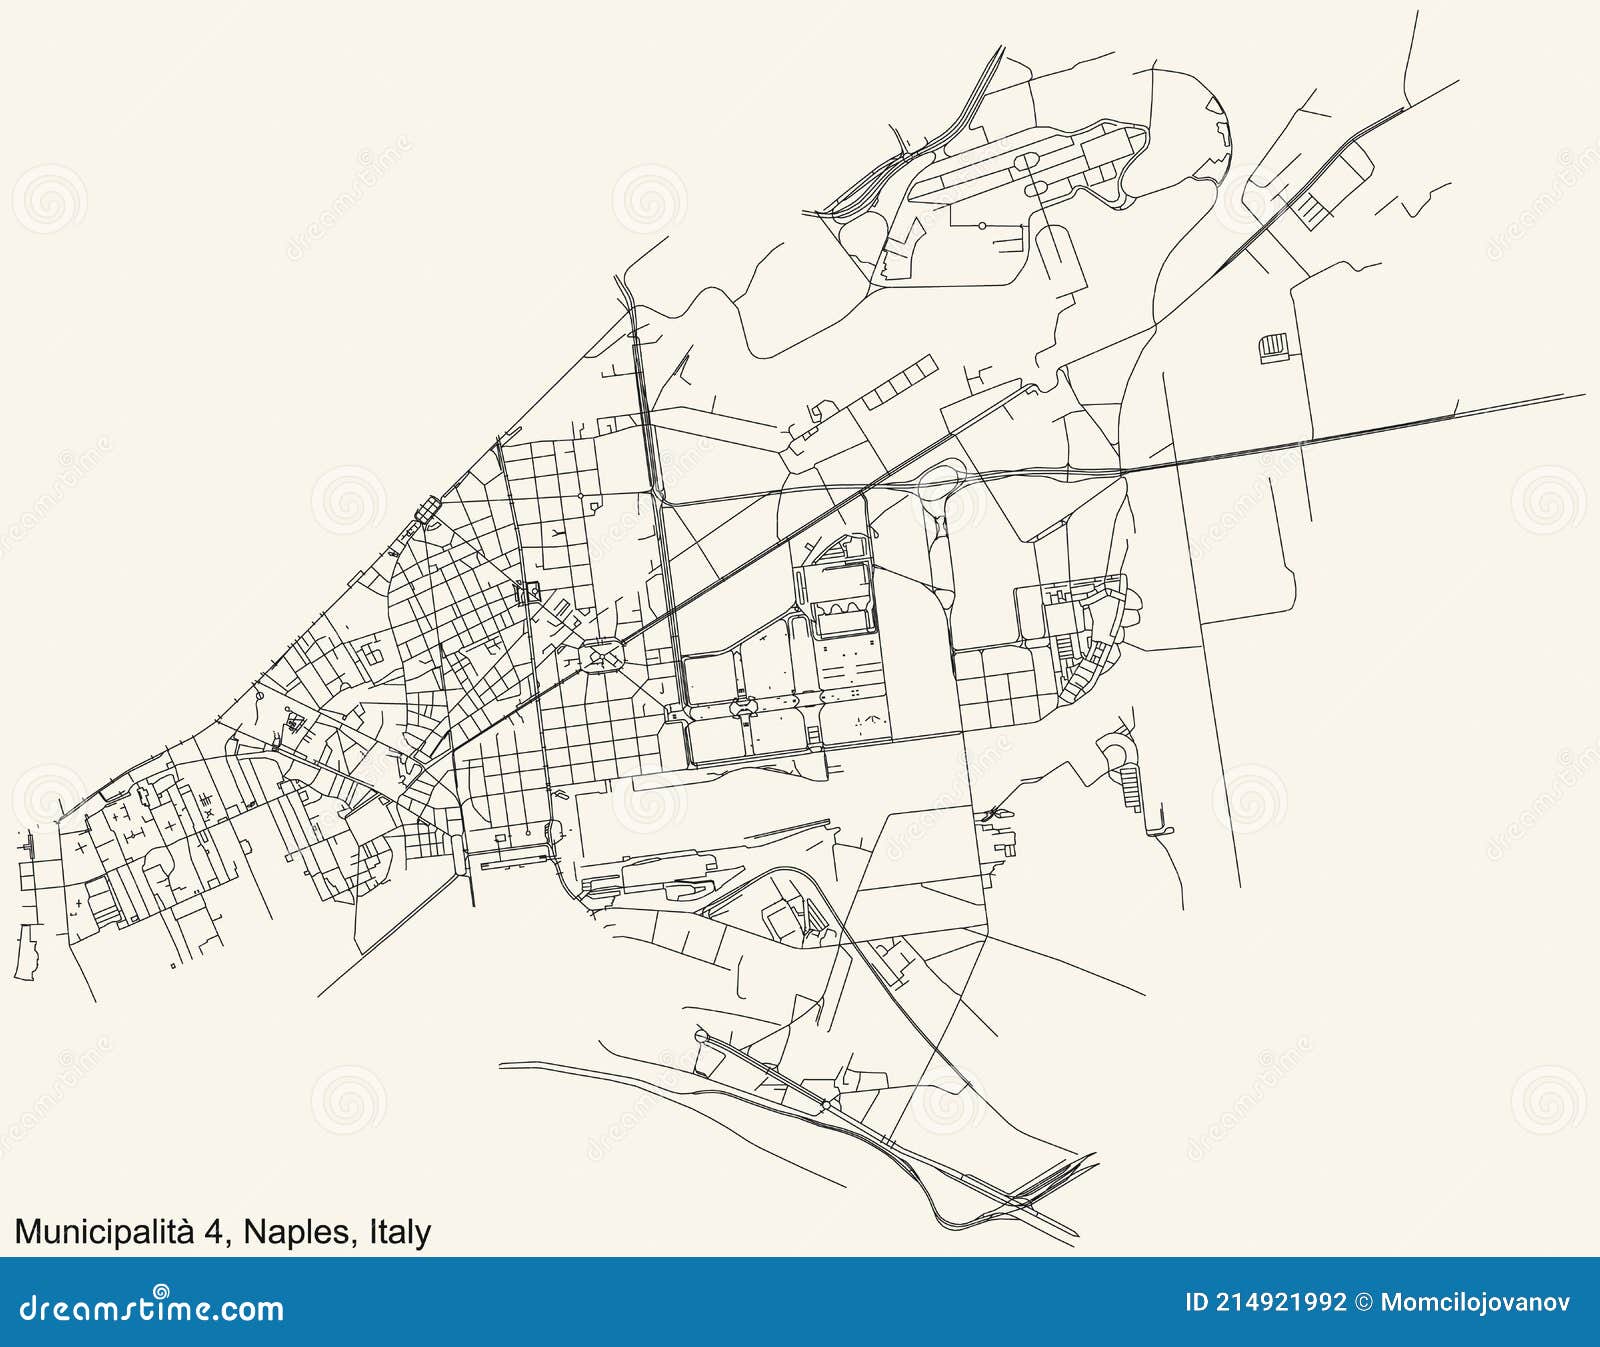 street roads map of the 4th municipality poggioreale, san lorenzo, vicaria, zona industriale of naples, italy